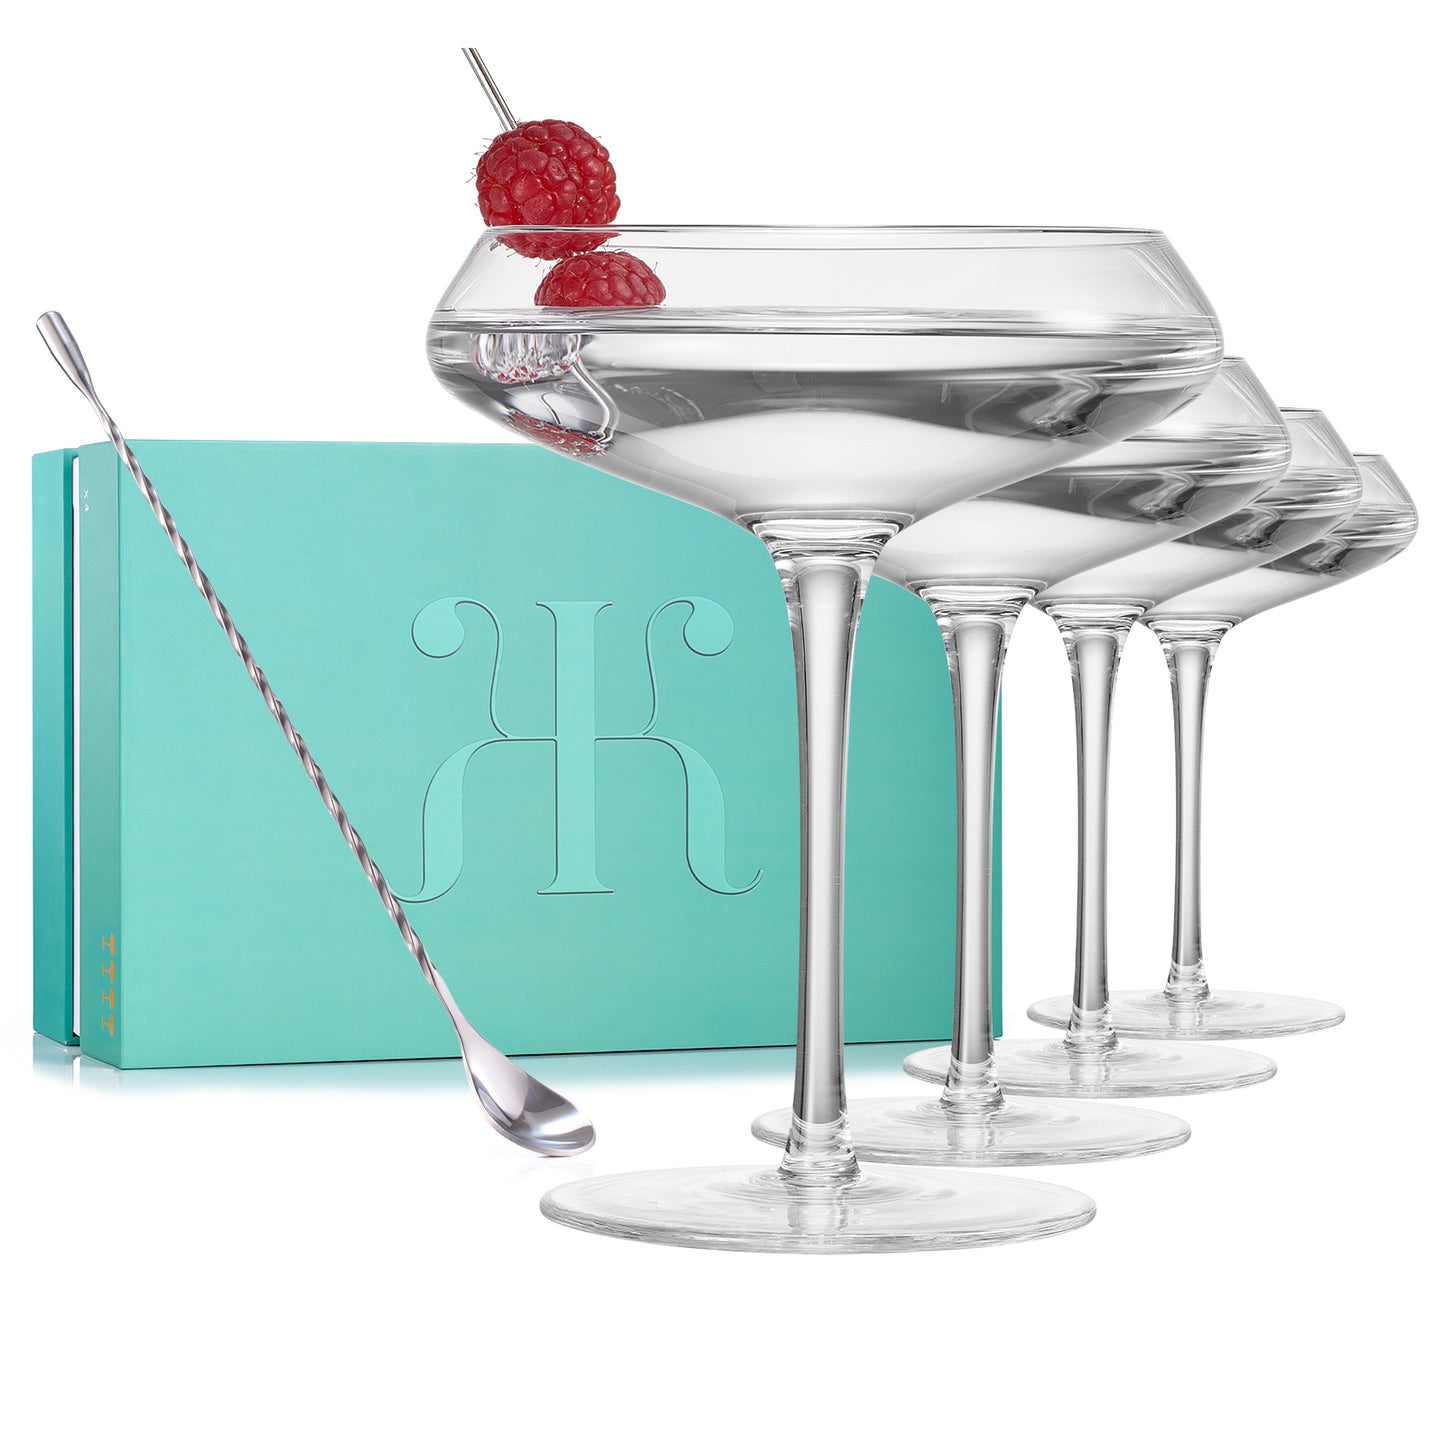 Spritz Coupe Cocktail Glassware, Set of 4